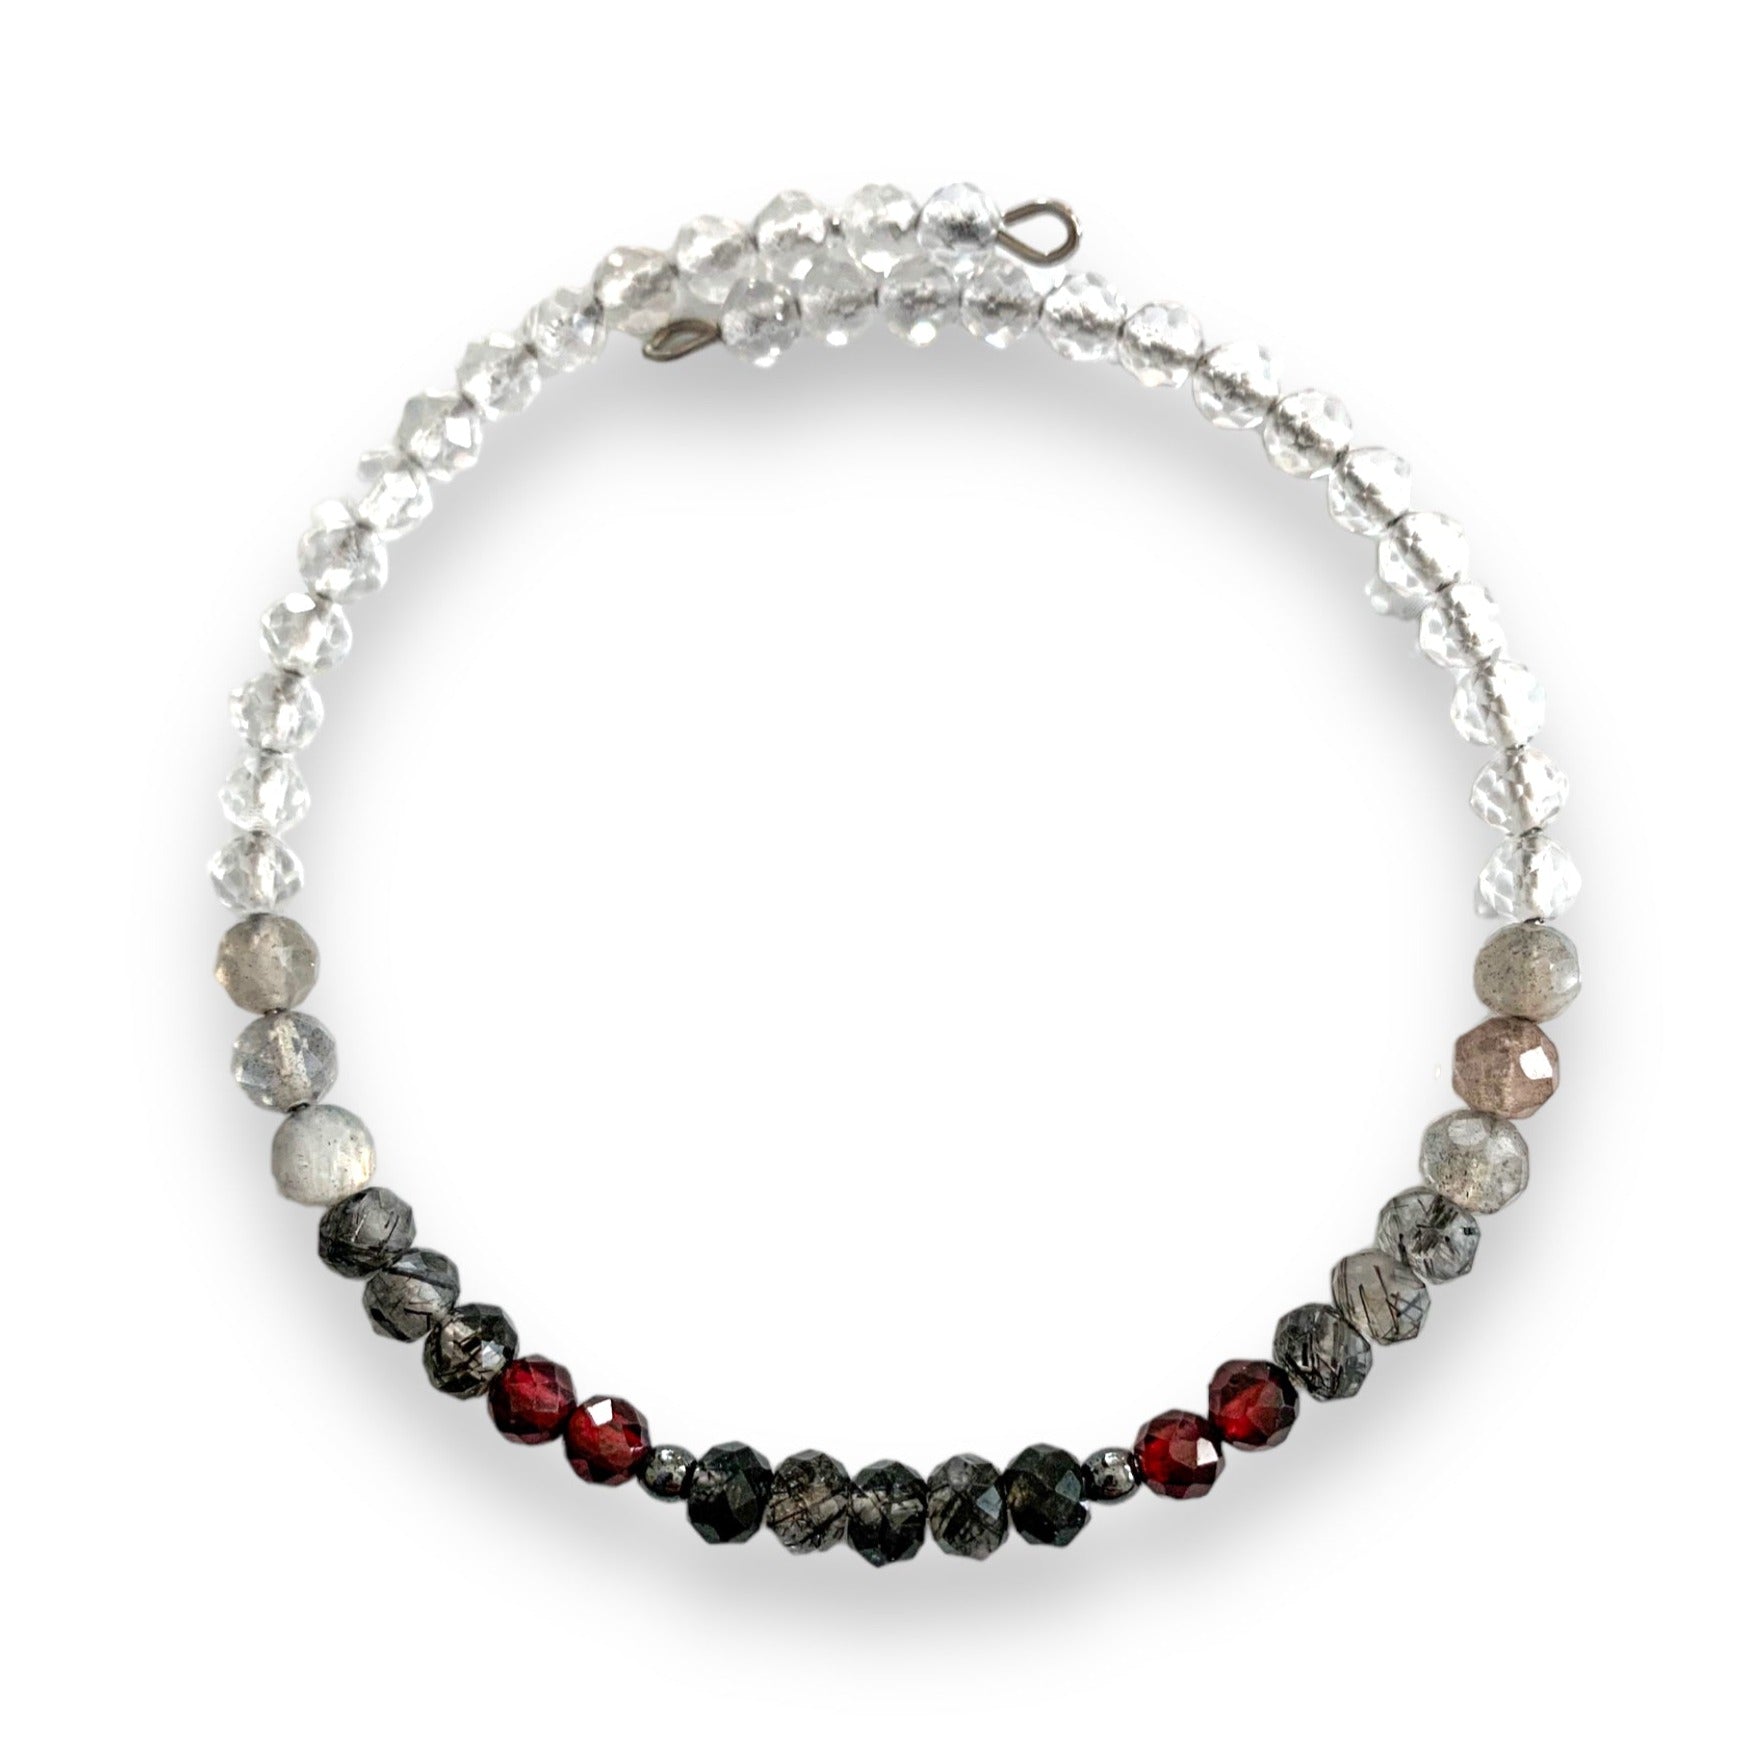 Hematite and Red Garnet wrap bracelet